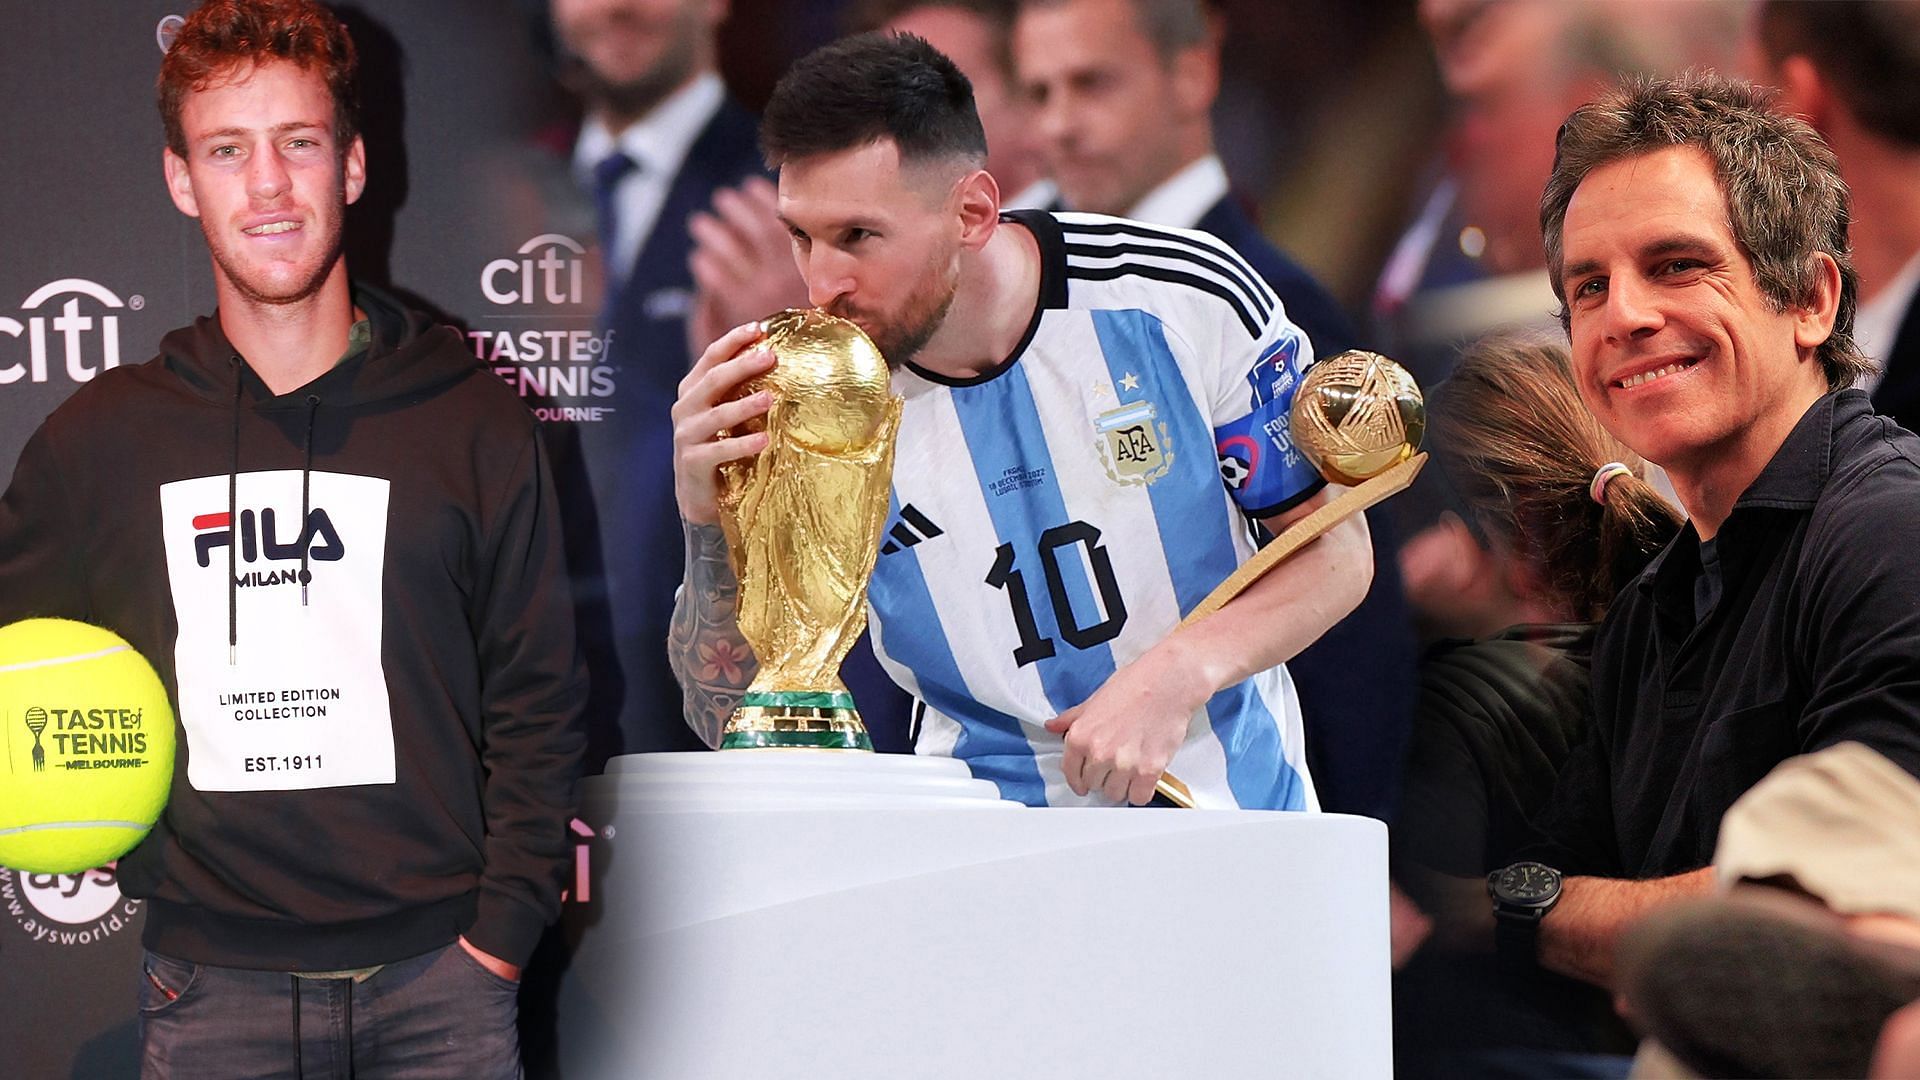 Diego Schwartzman (left) and Ben Stiller(right) excited at Argentina winning FIFA World Cup title